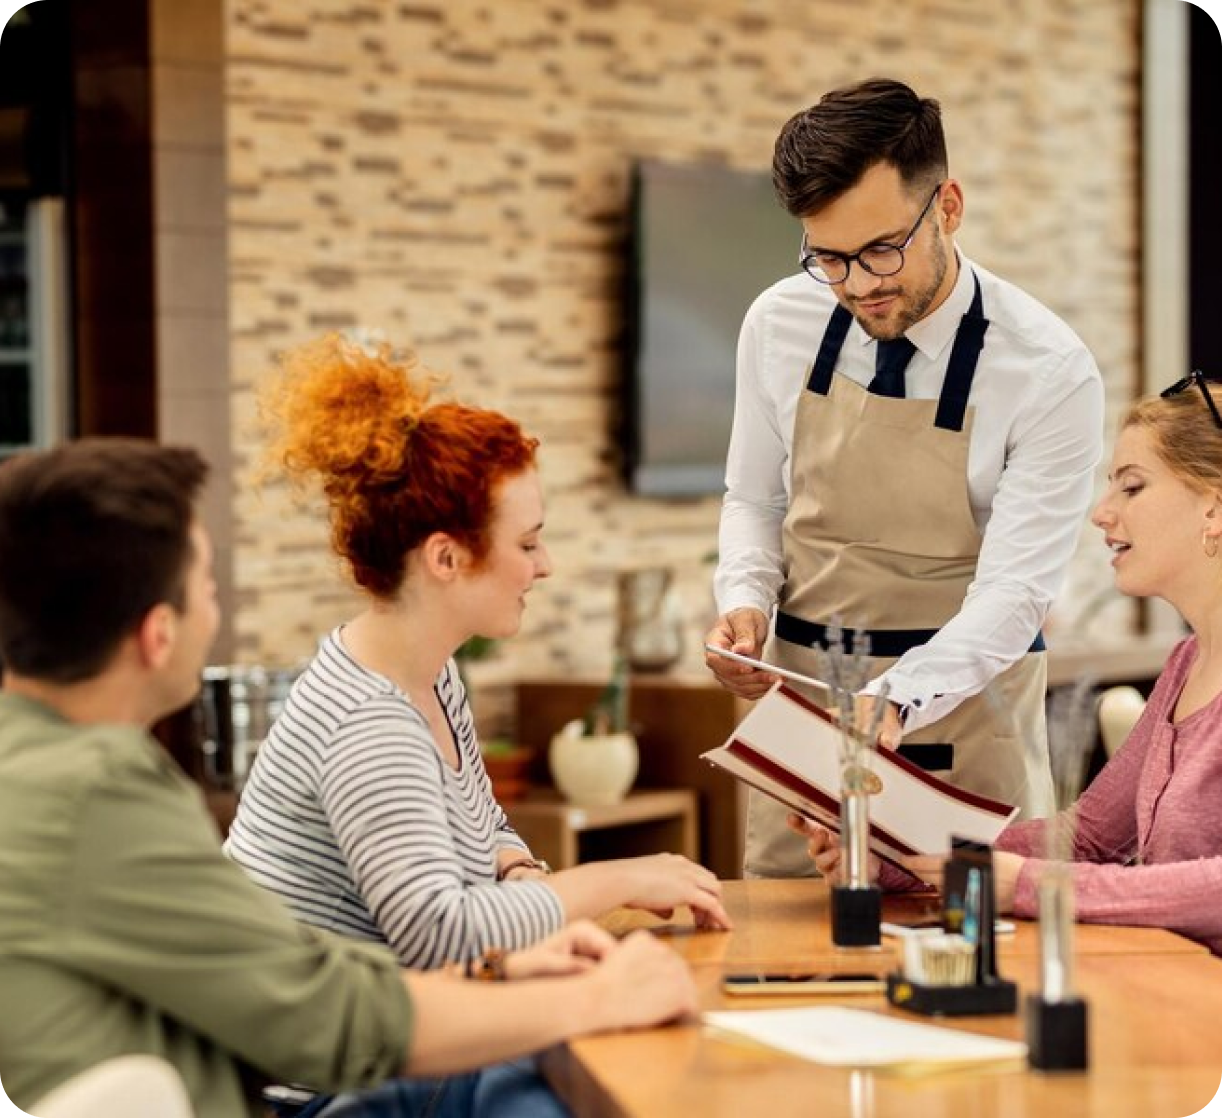 Customer earning rewards with restaurant loyalty program